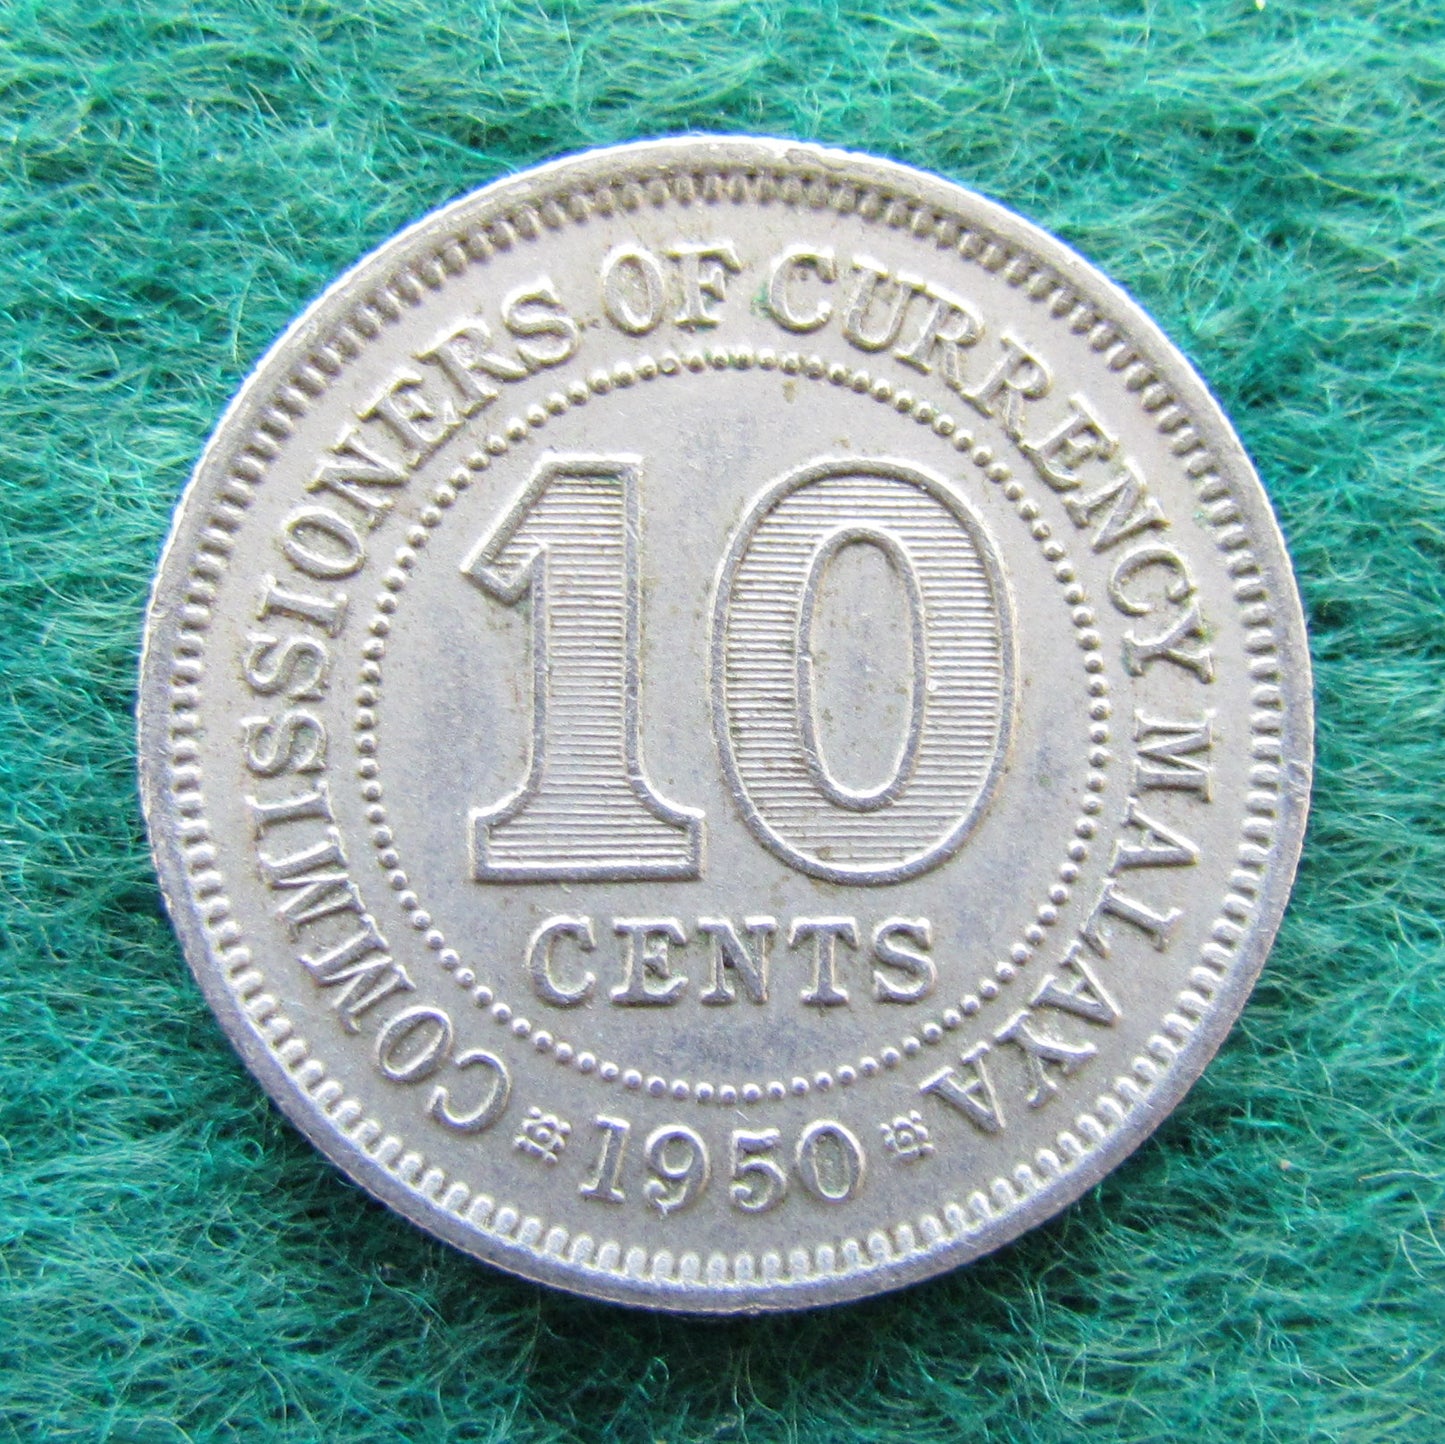 Malaya 1950 10 Cent King George VI Coin - Circulated